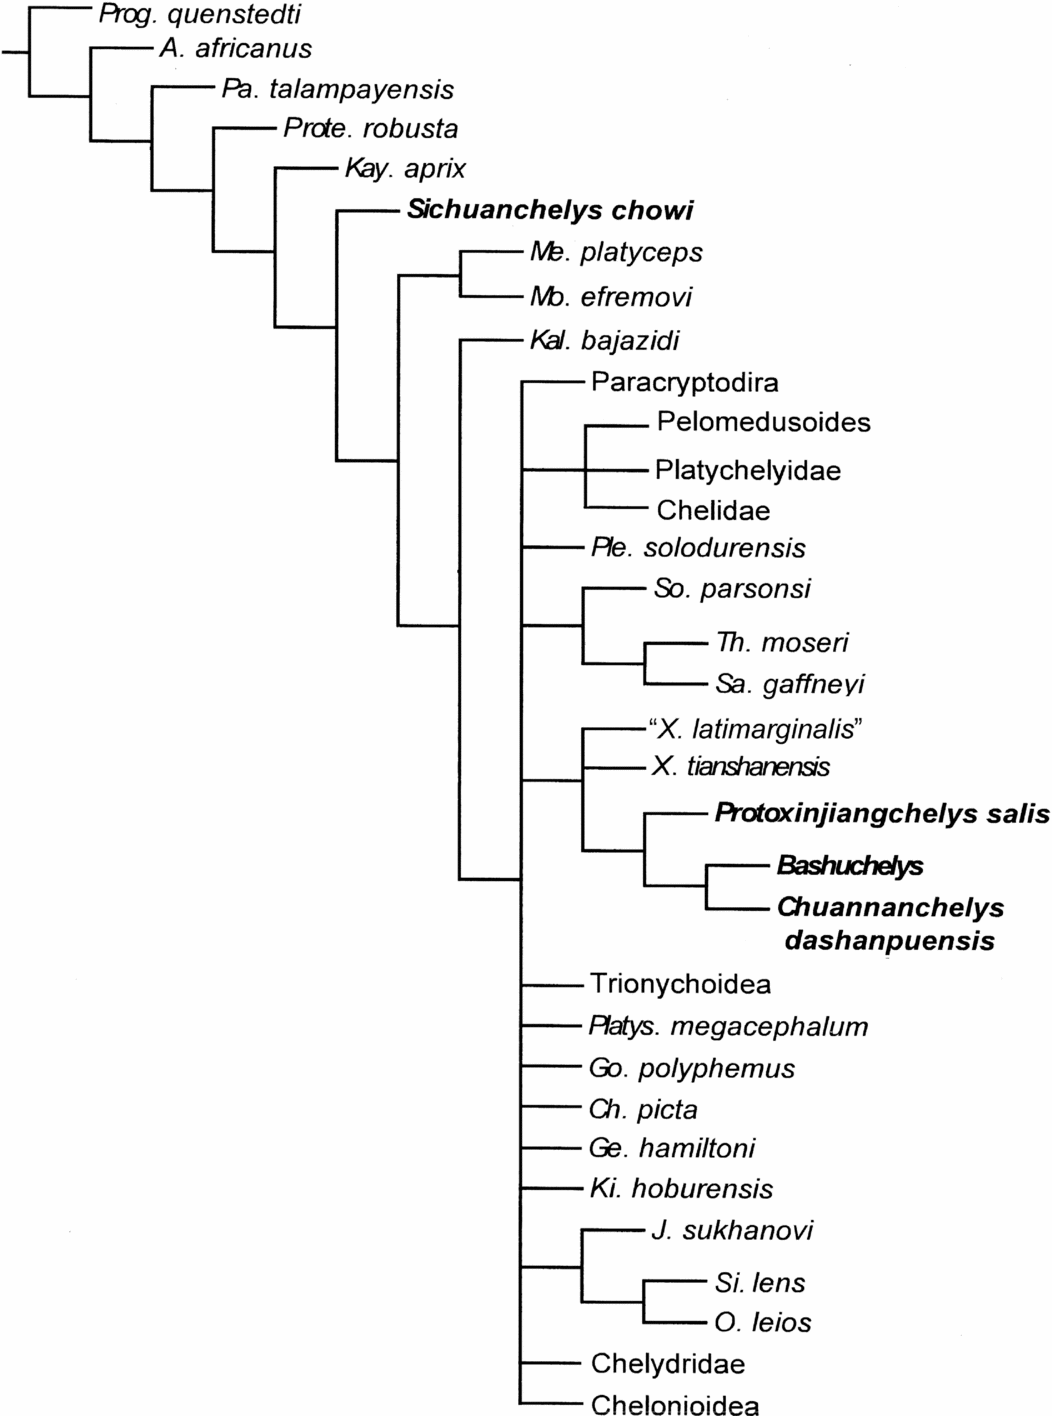 Phylogenetic origin of the turtle plastron and hypoischium